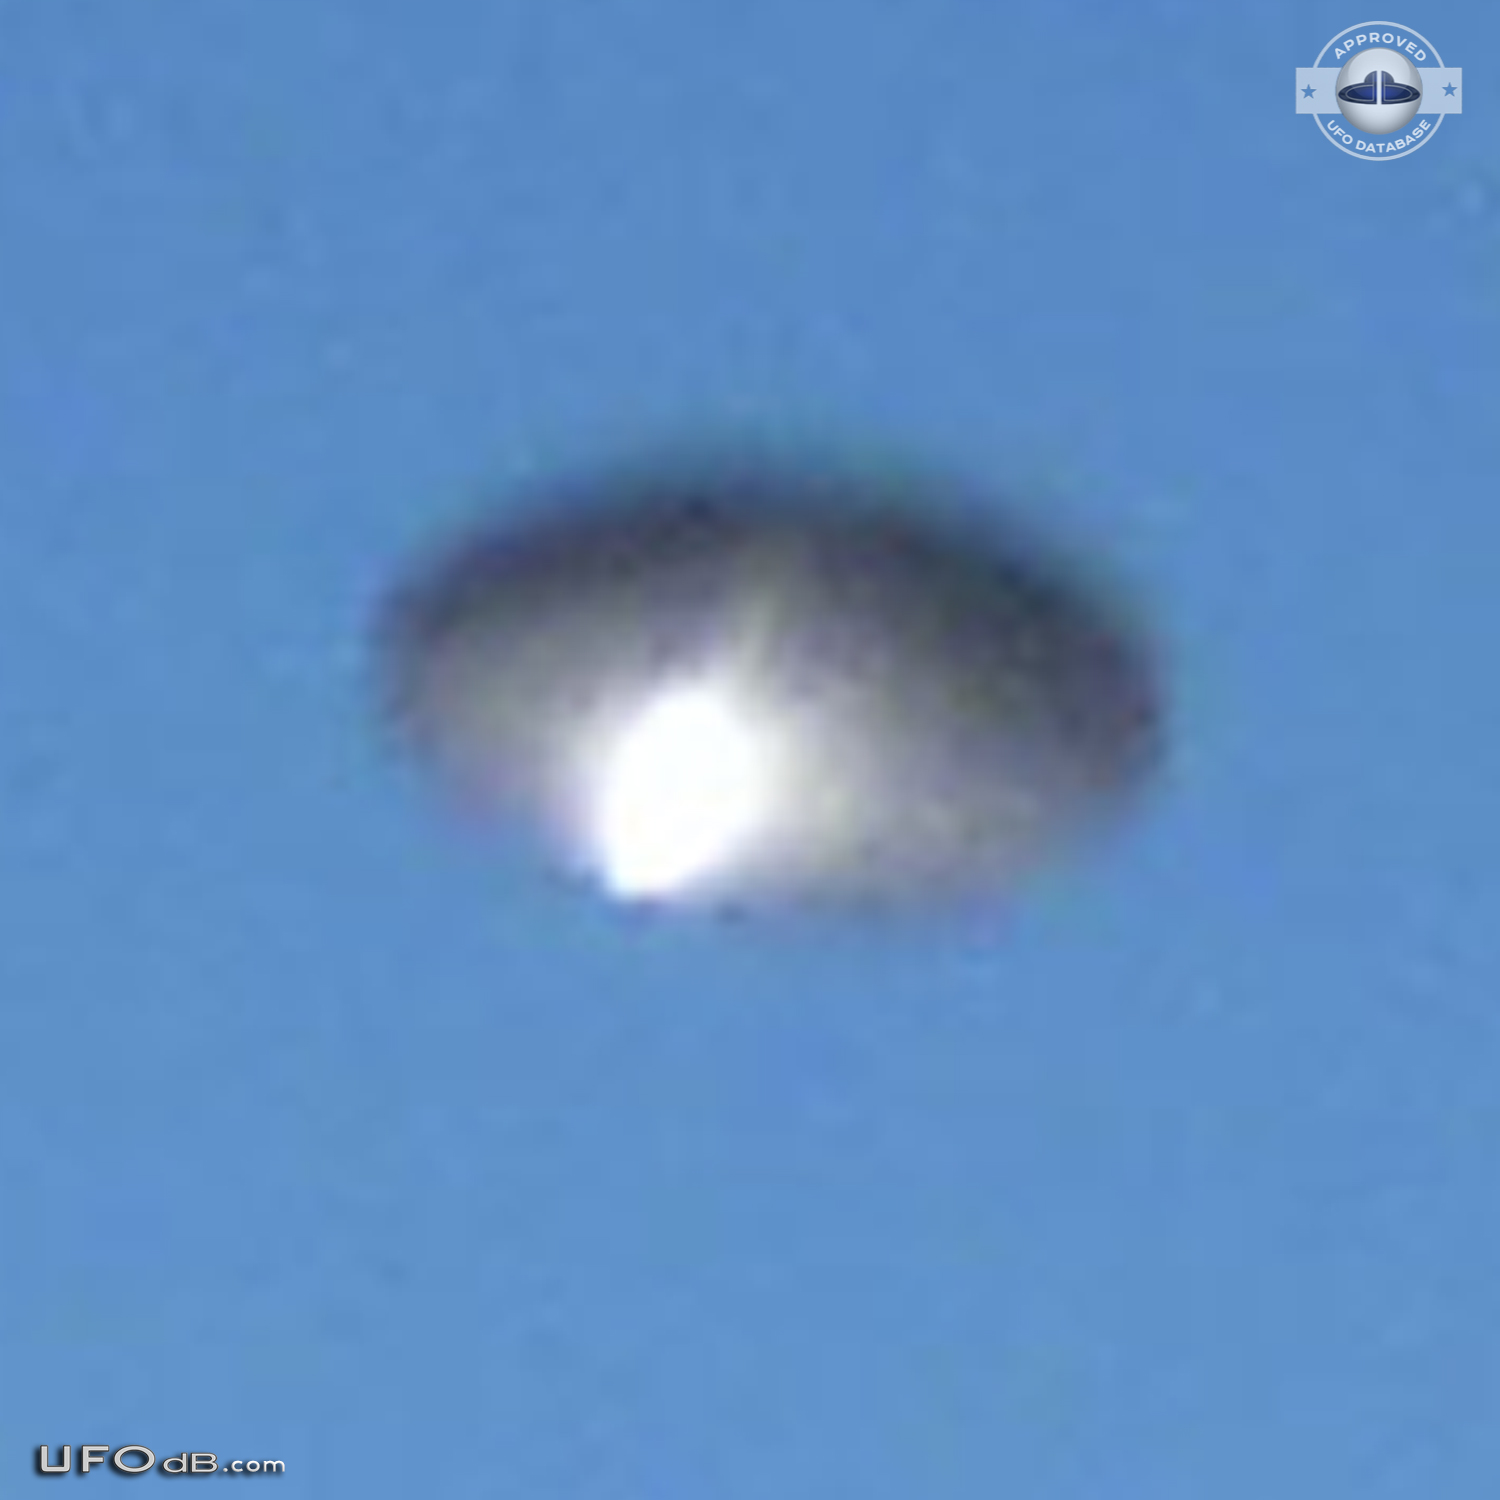 UFO saucer seen near Area 51 Black Mailbox near Rachel Nevada 2012 UFO Picture #526-8